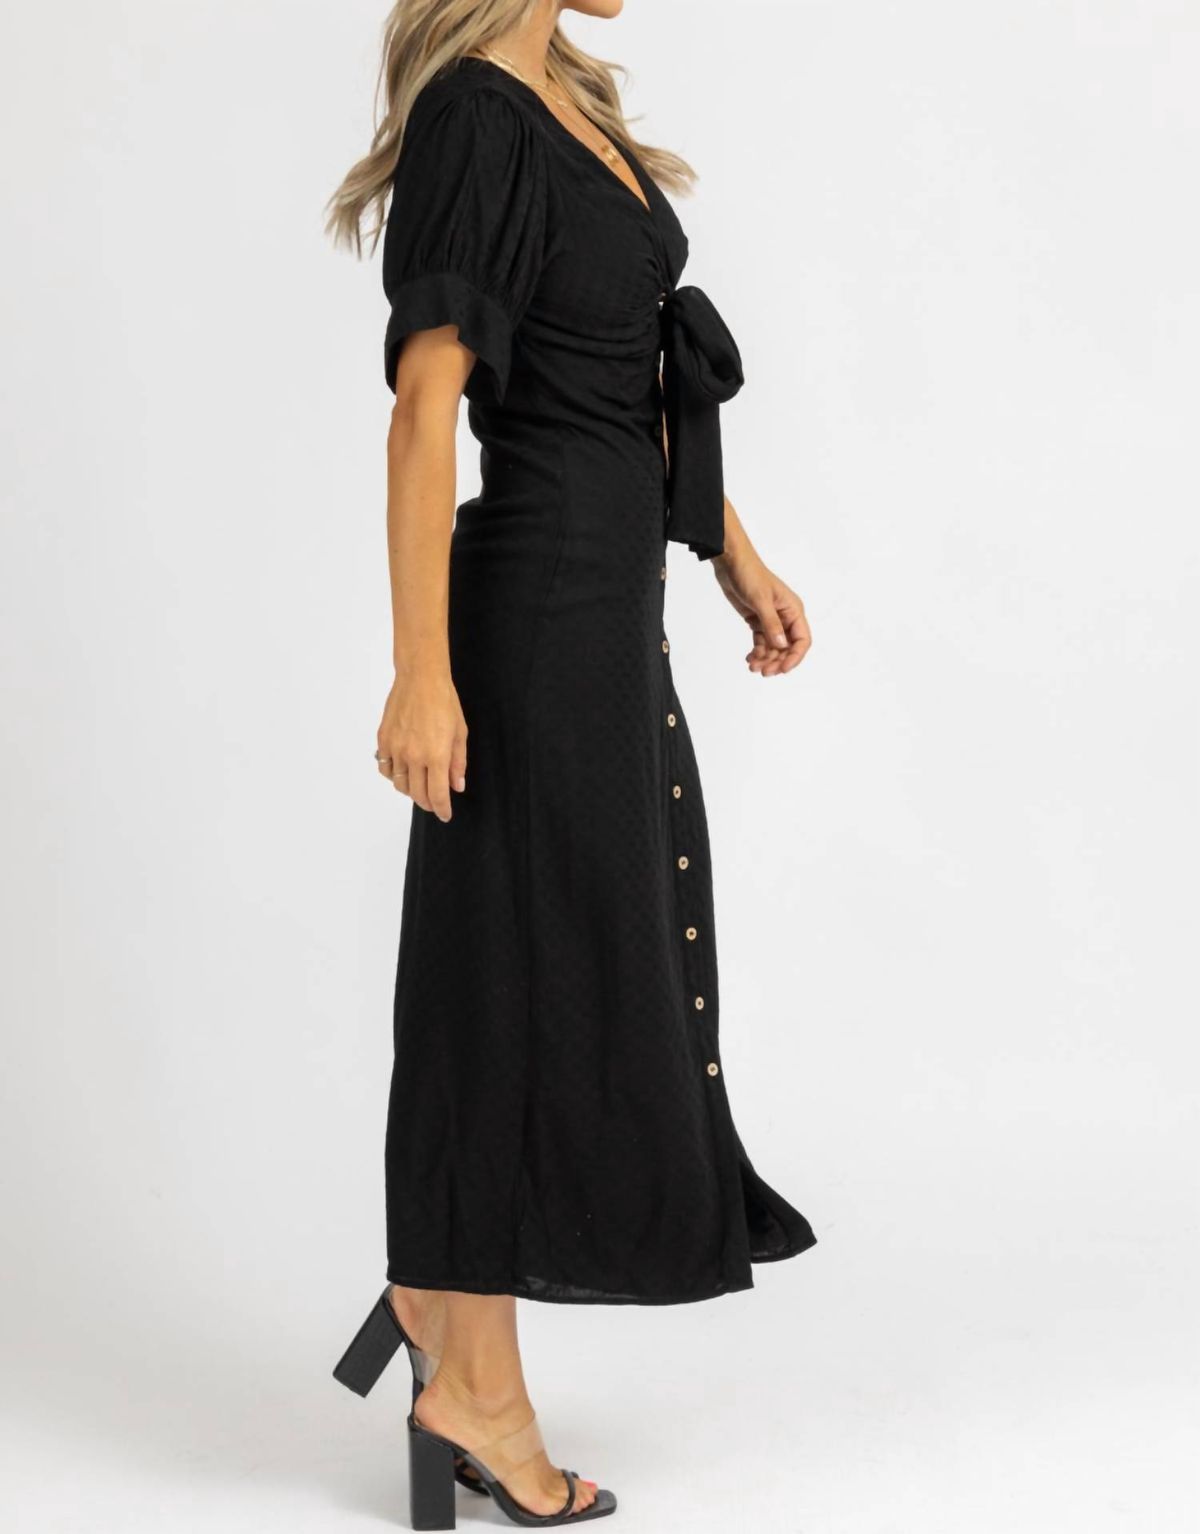 Style 1-1463605839-3236 Malibu Bum Size S Cap Sleeve Black Floor Length Maxi on Queenly